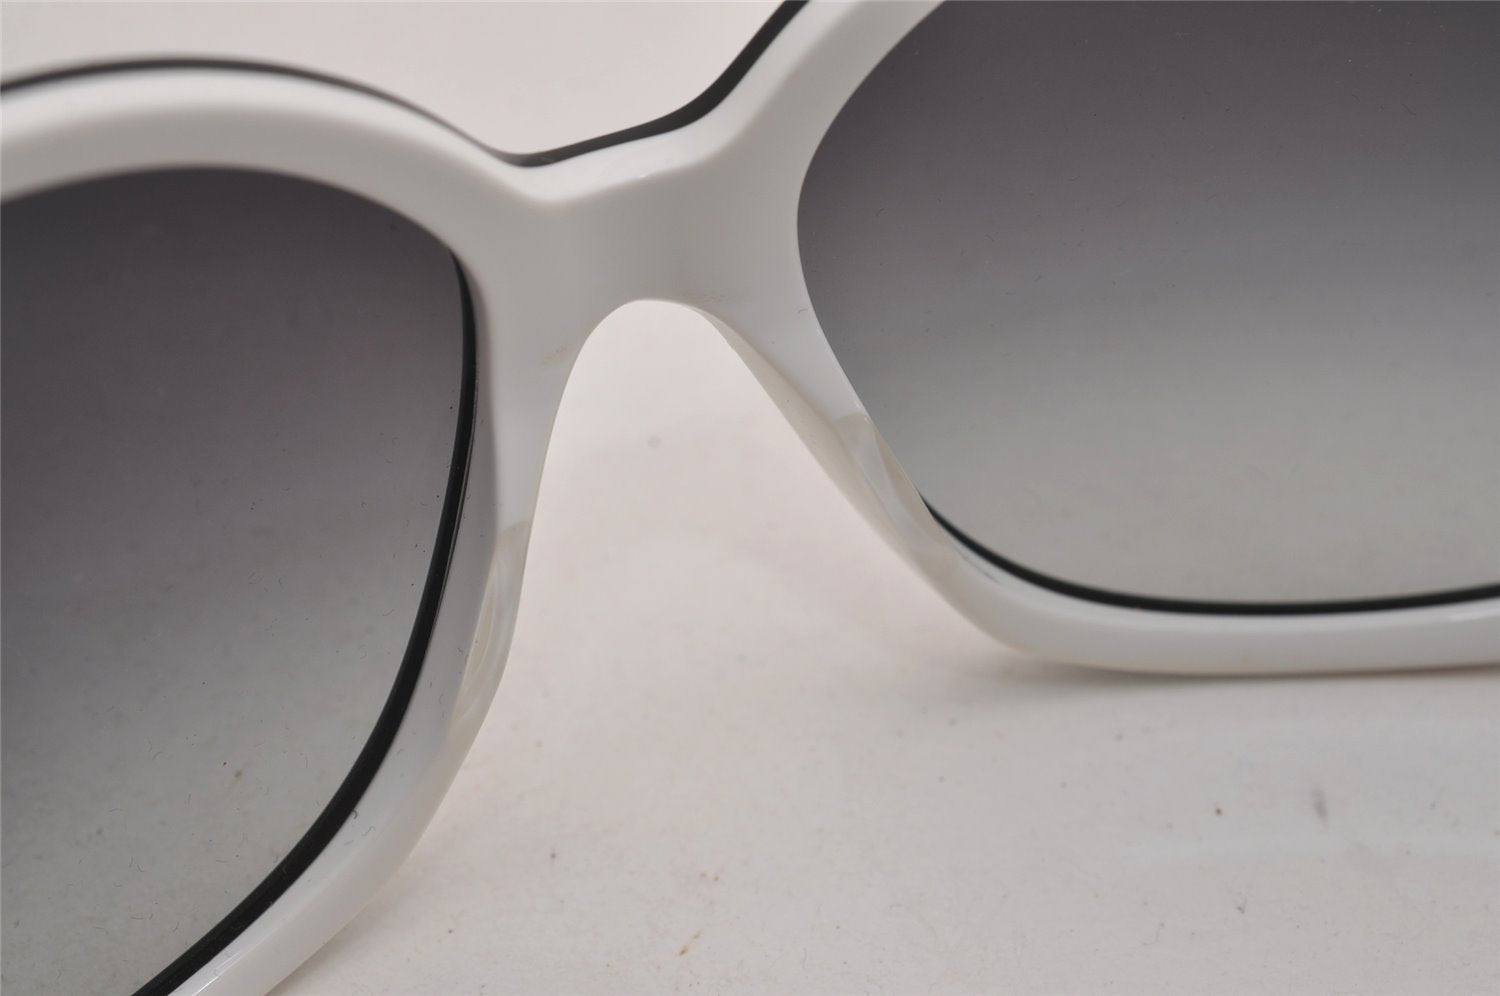 Authentic CHANEL Vintage Sunglasses CoCo Mark CC Logo Plastic 5174 Black 2281J